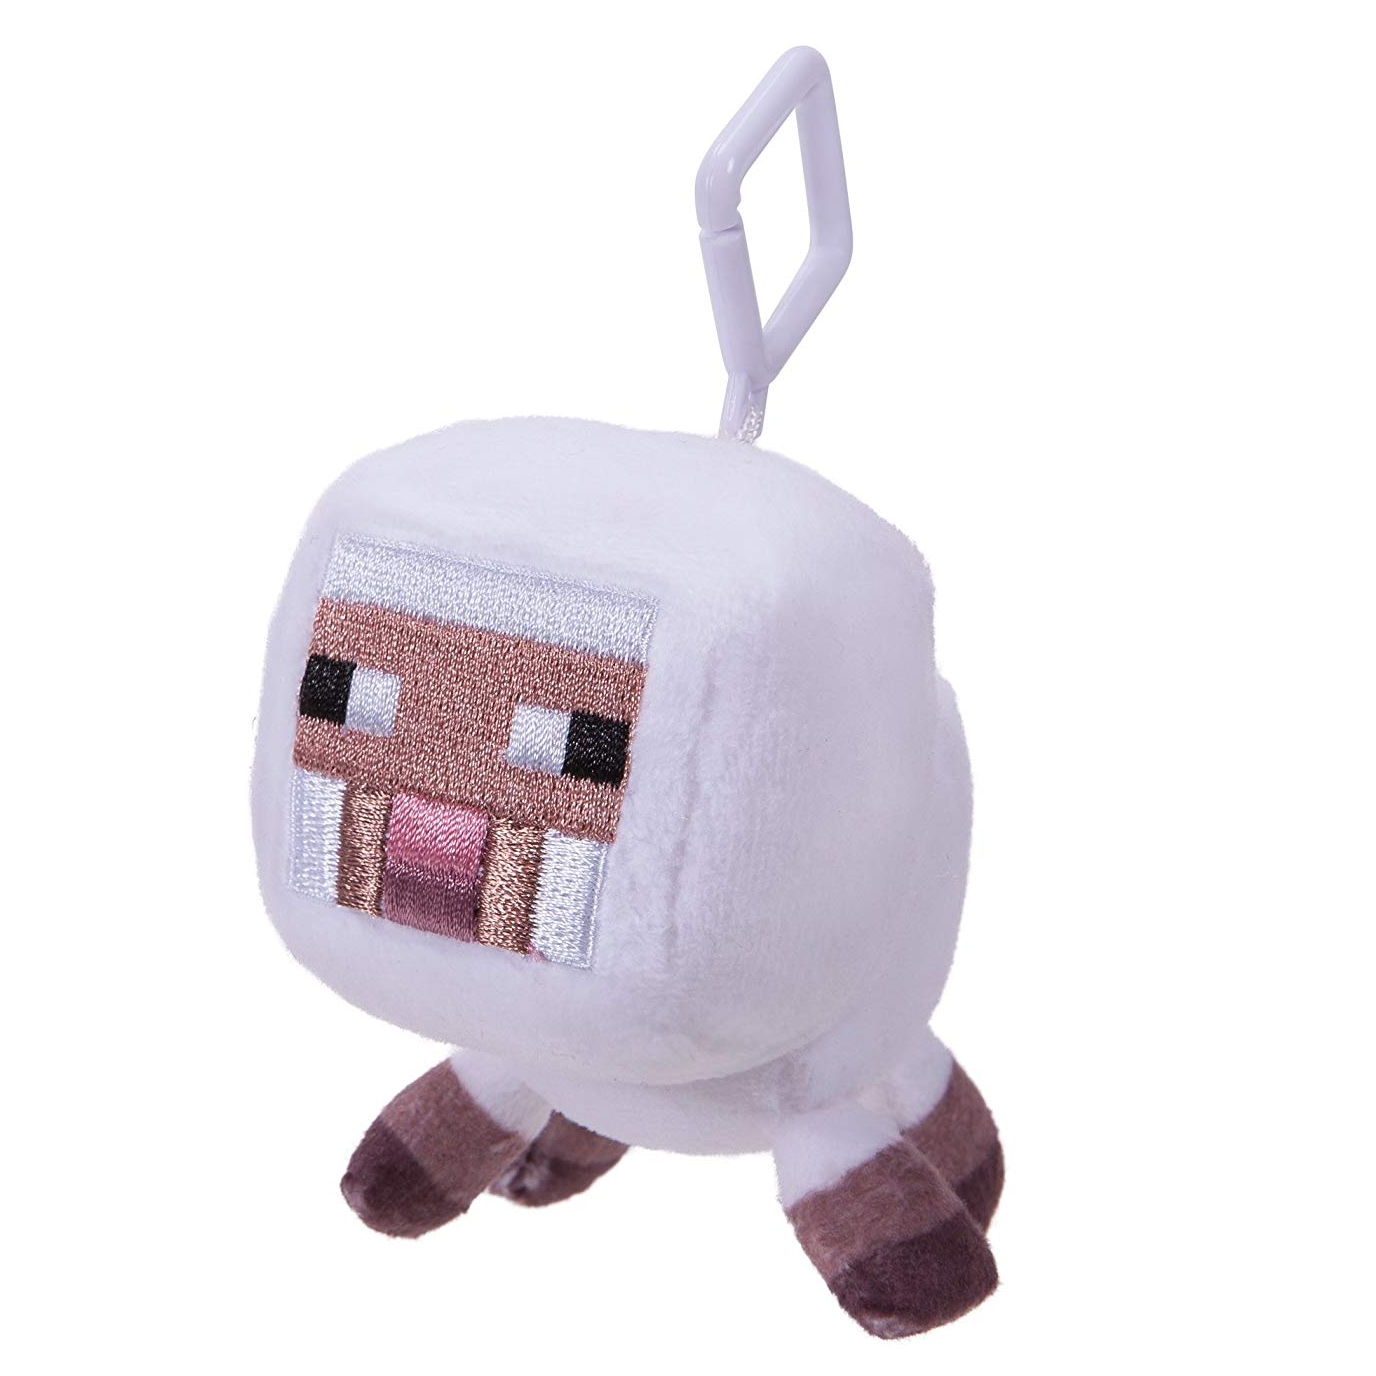 Minecraft - Baby White Sheep Clip Plush, Series 1